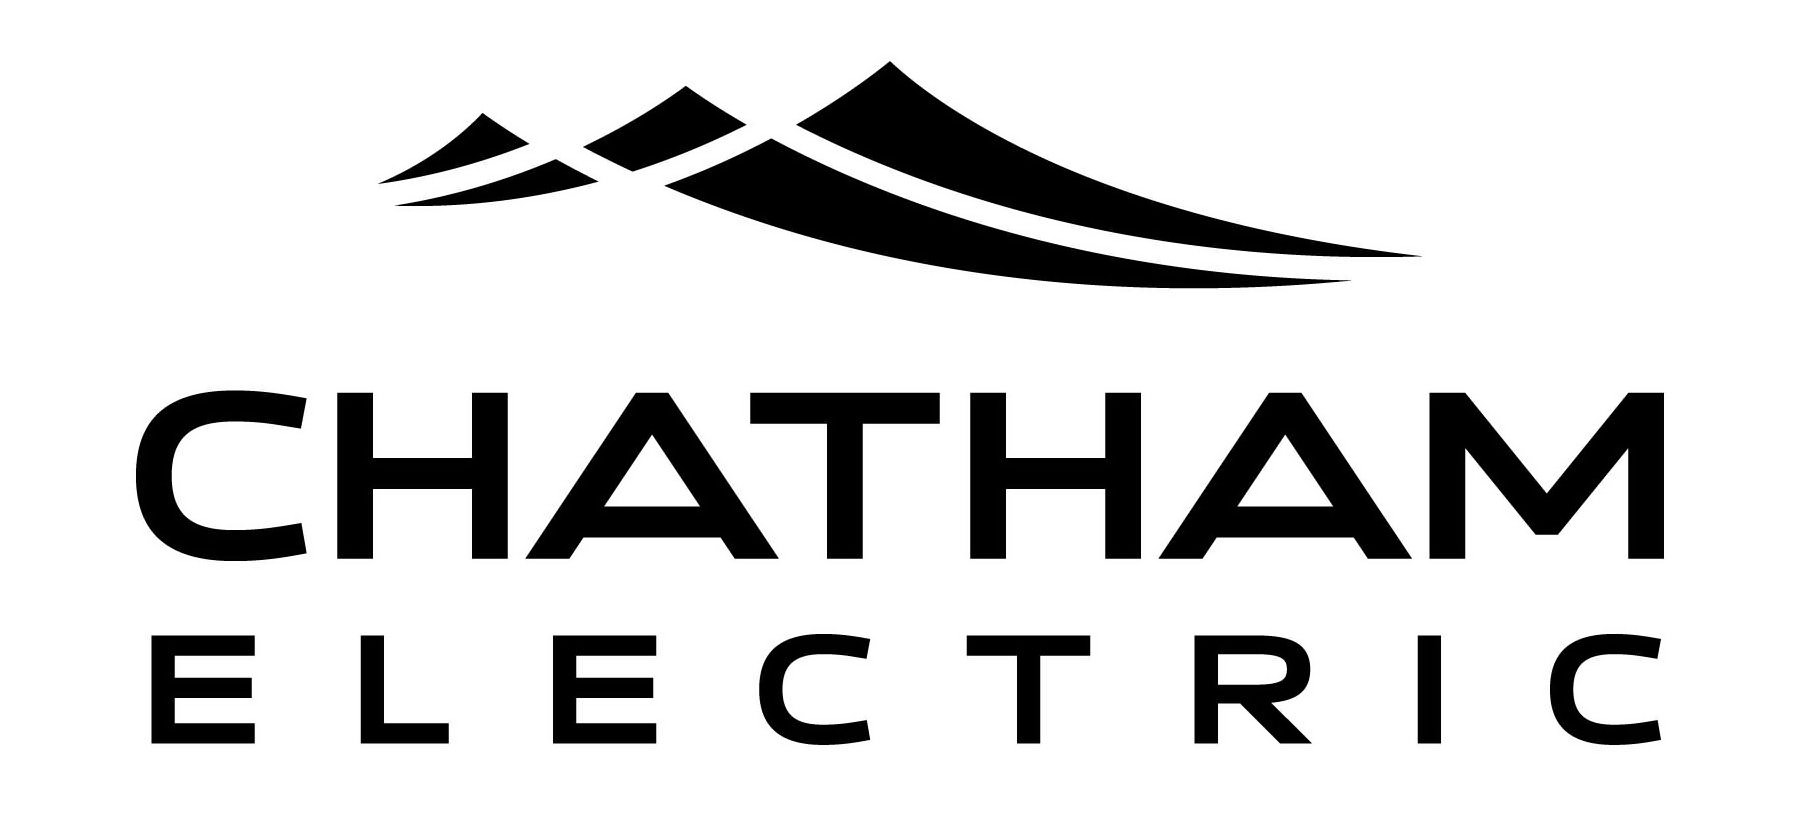  CHATHAM ELECTRIC